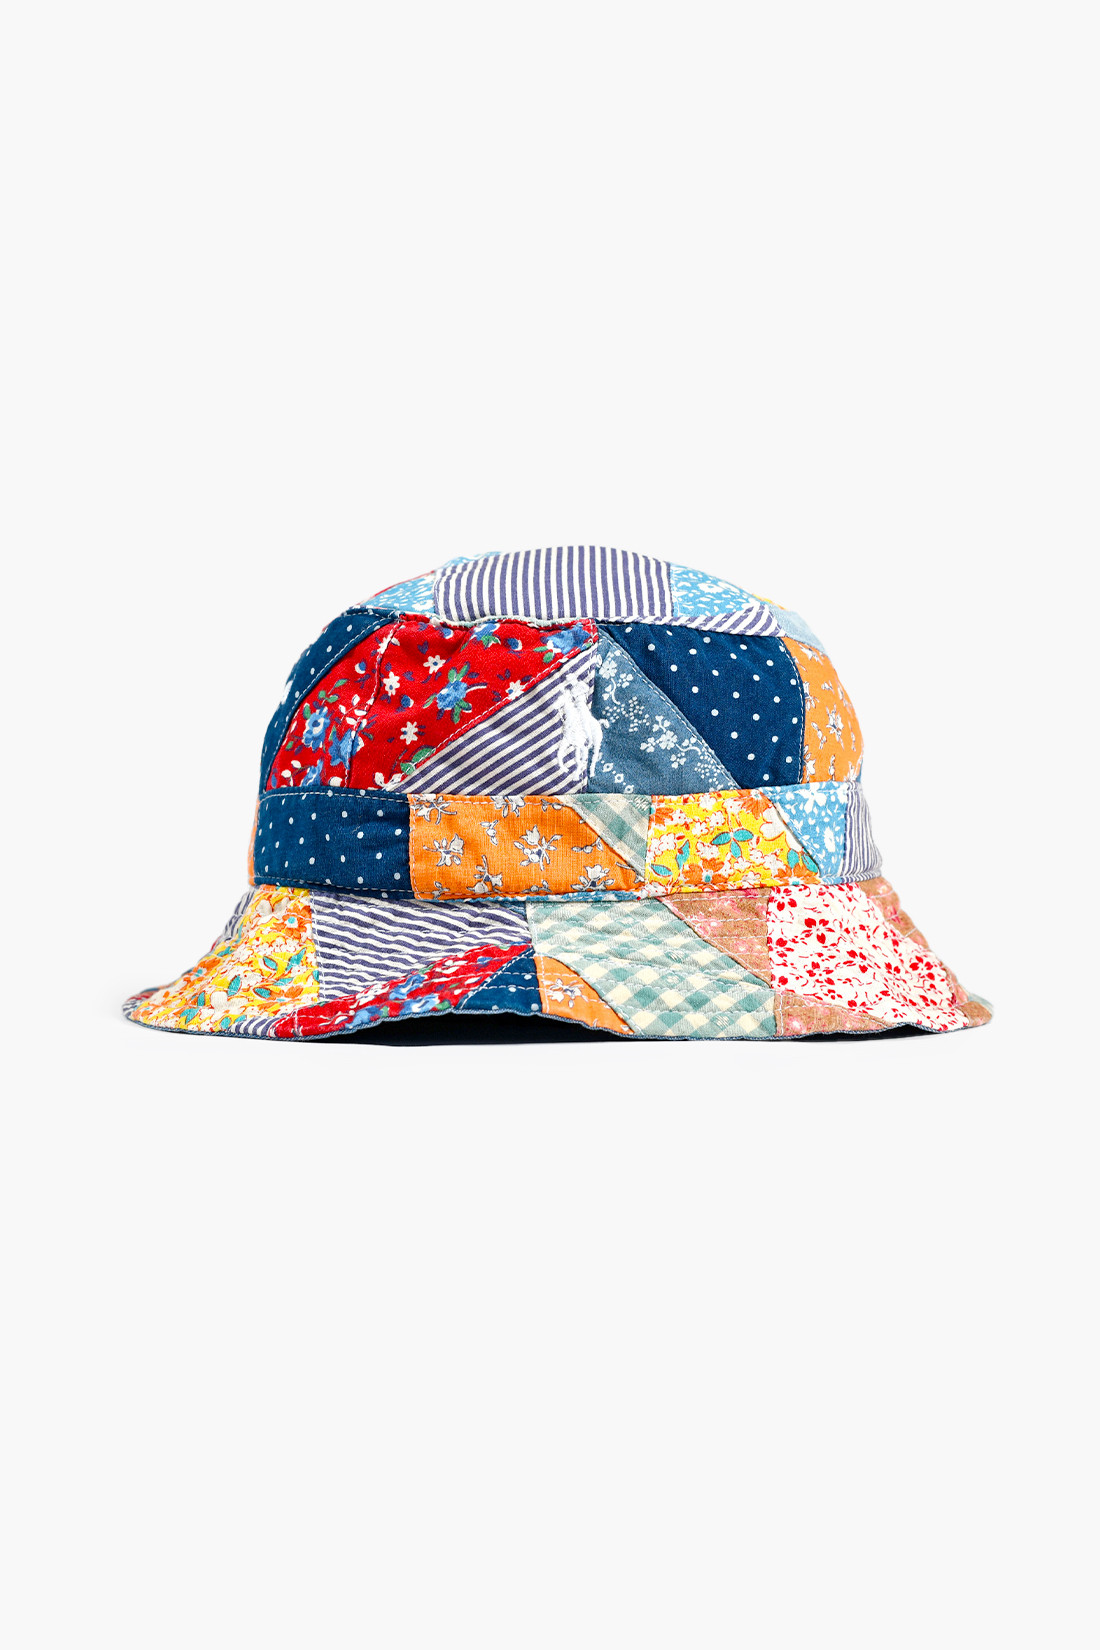 Polo ralph lauren Loft bucket hat patchwork Multi - GRADUATE STORE | EN